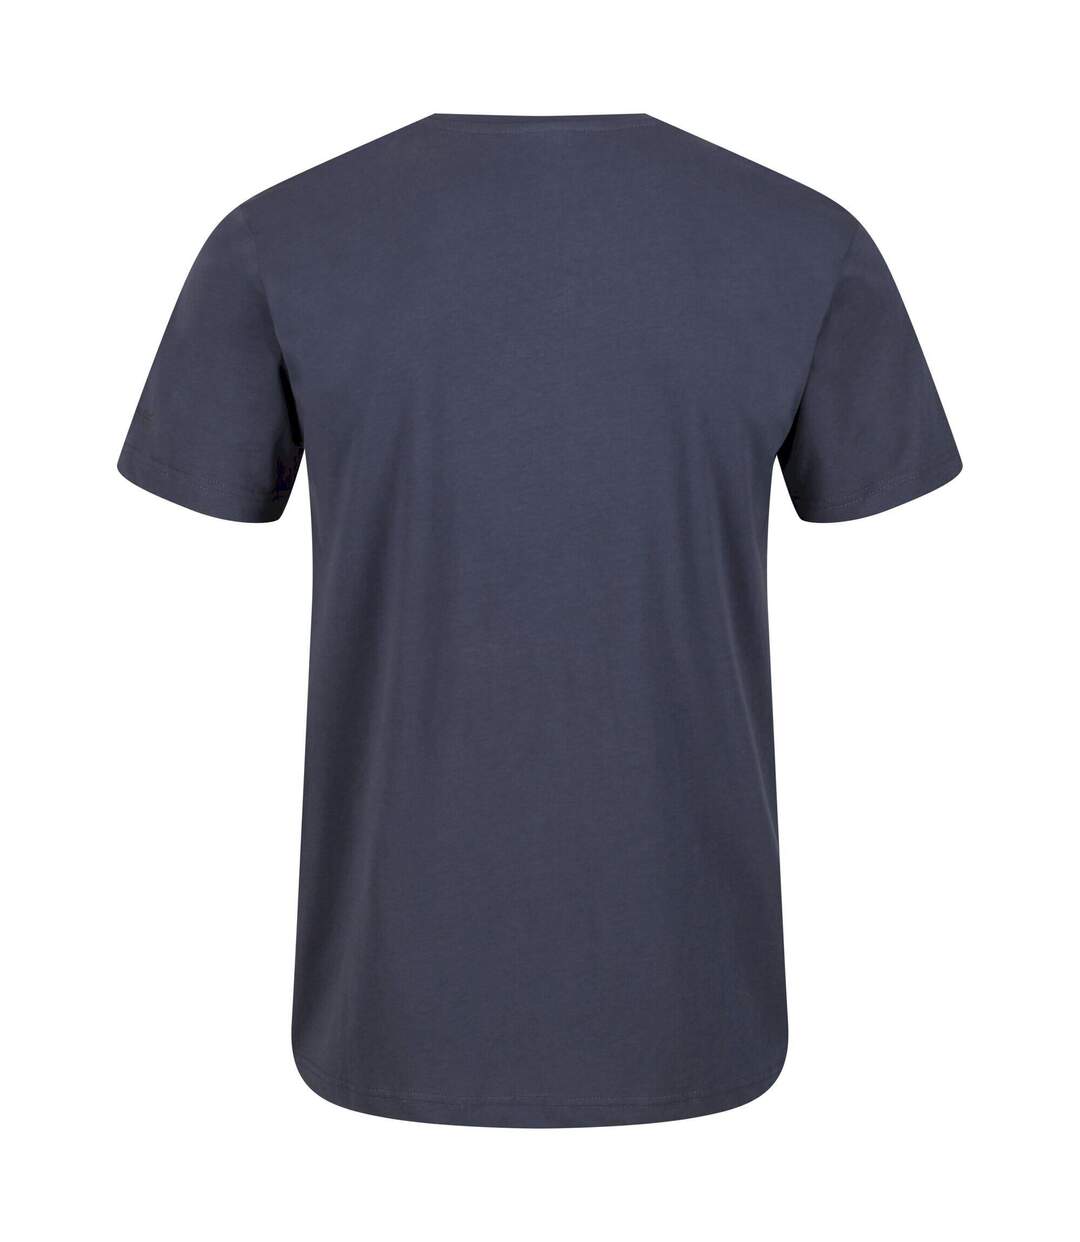 Regatta - T-shirt BREEZED - Homme (Gris foncé) - UTRG6806